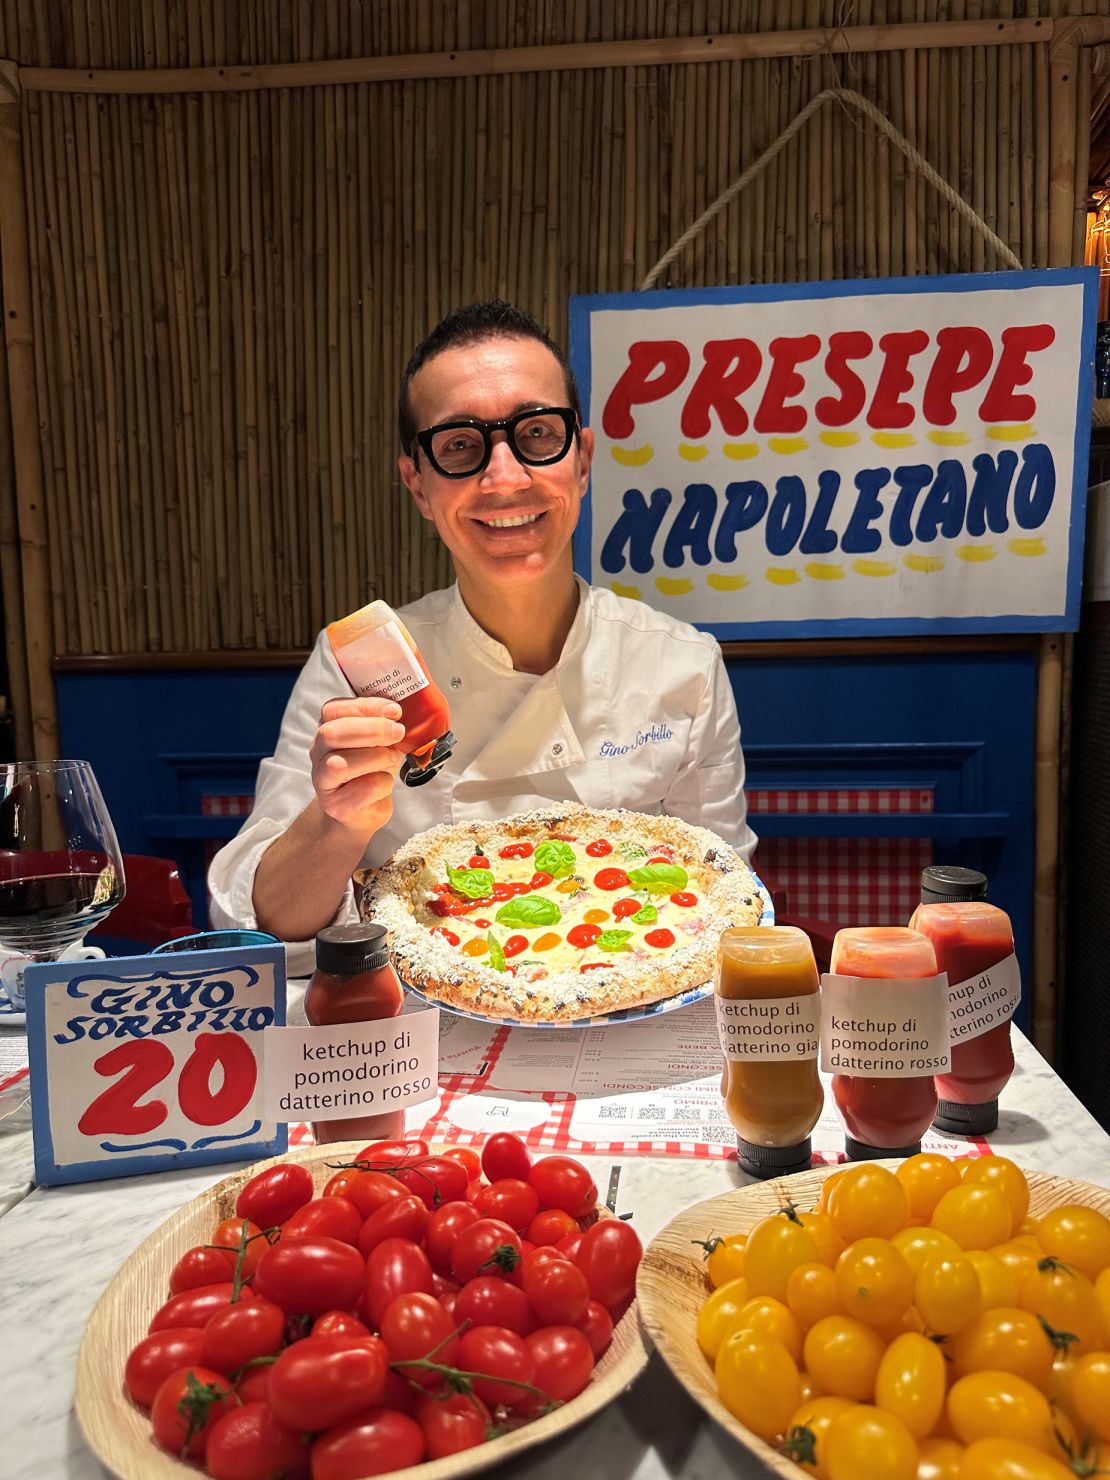 Sorbillo has since created a ketchup pizza to goad his critics even more.